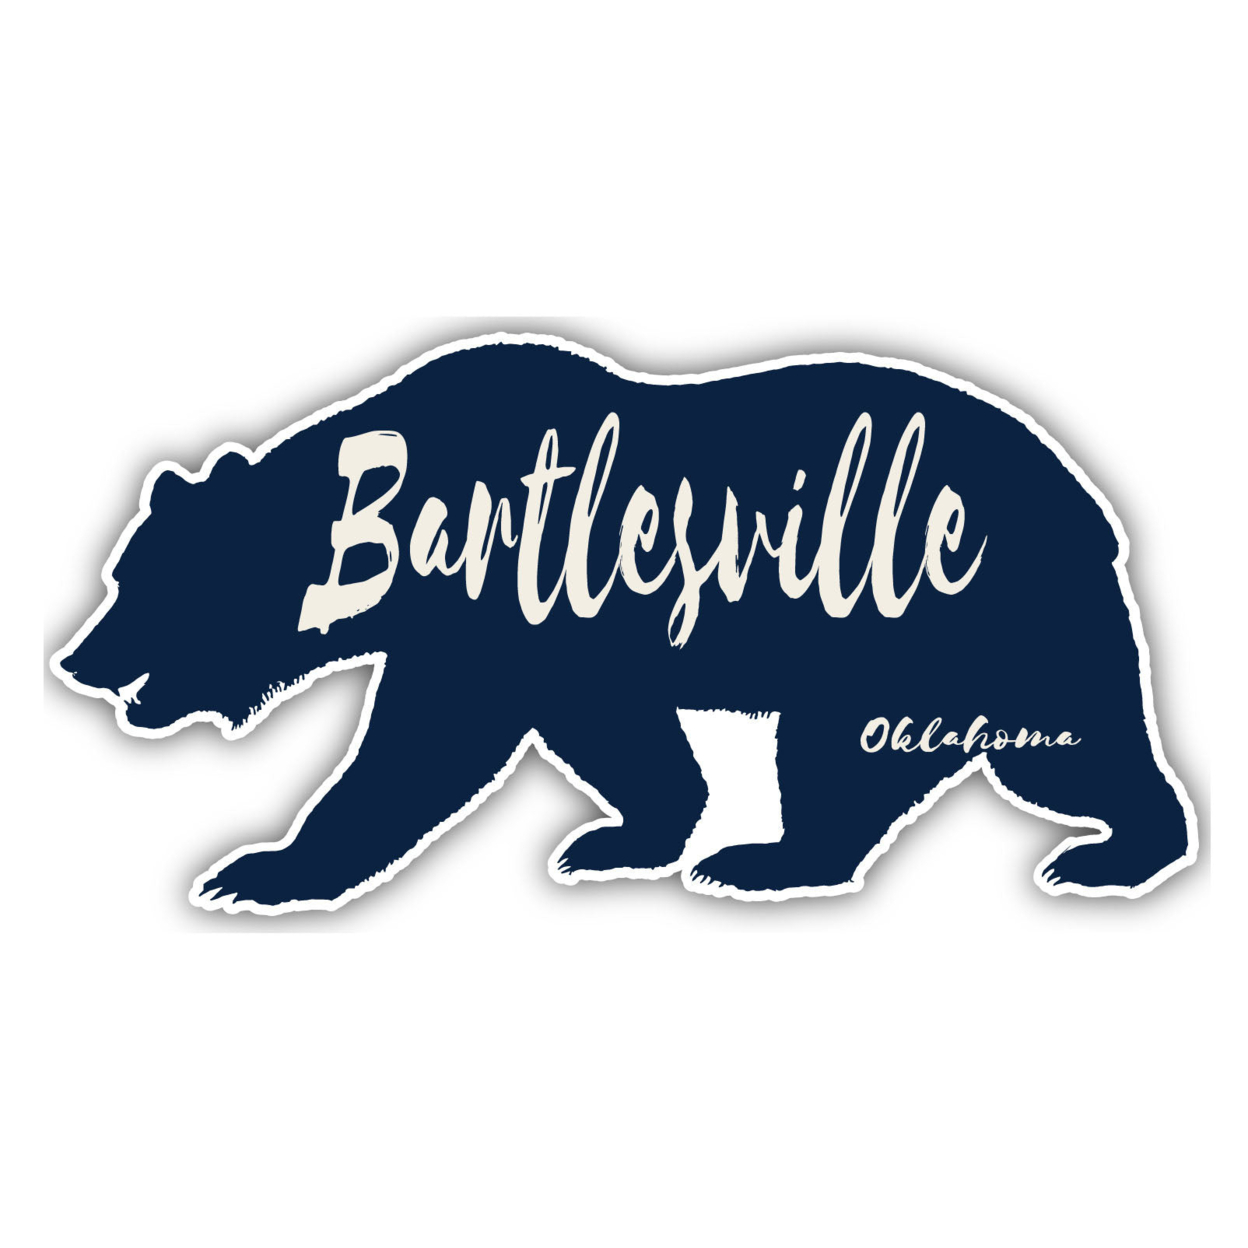 Bartlesville Oklahoma Souvenir Decorative Stickers (Choose Theme And Size) - Single Unit, 6-Inch, Bear